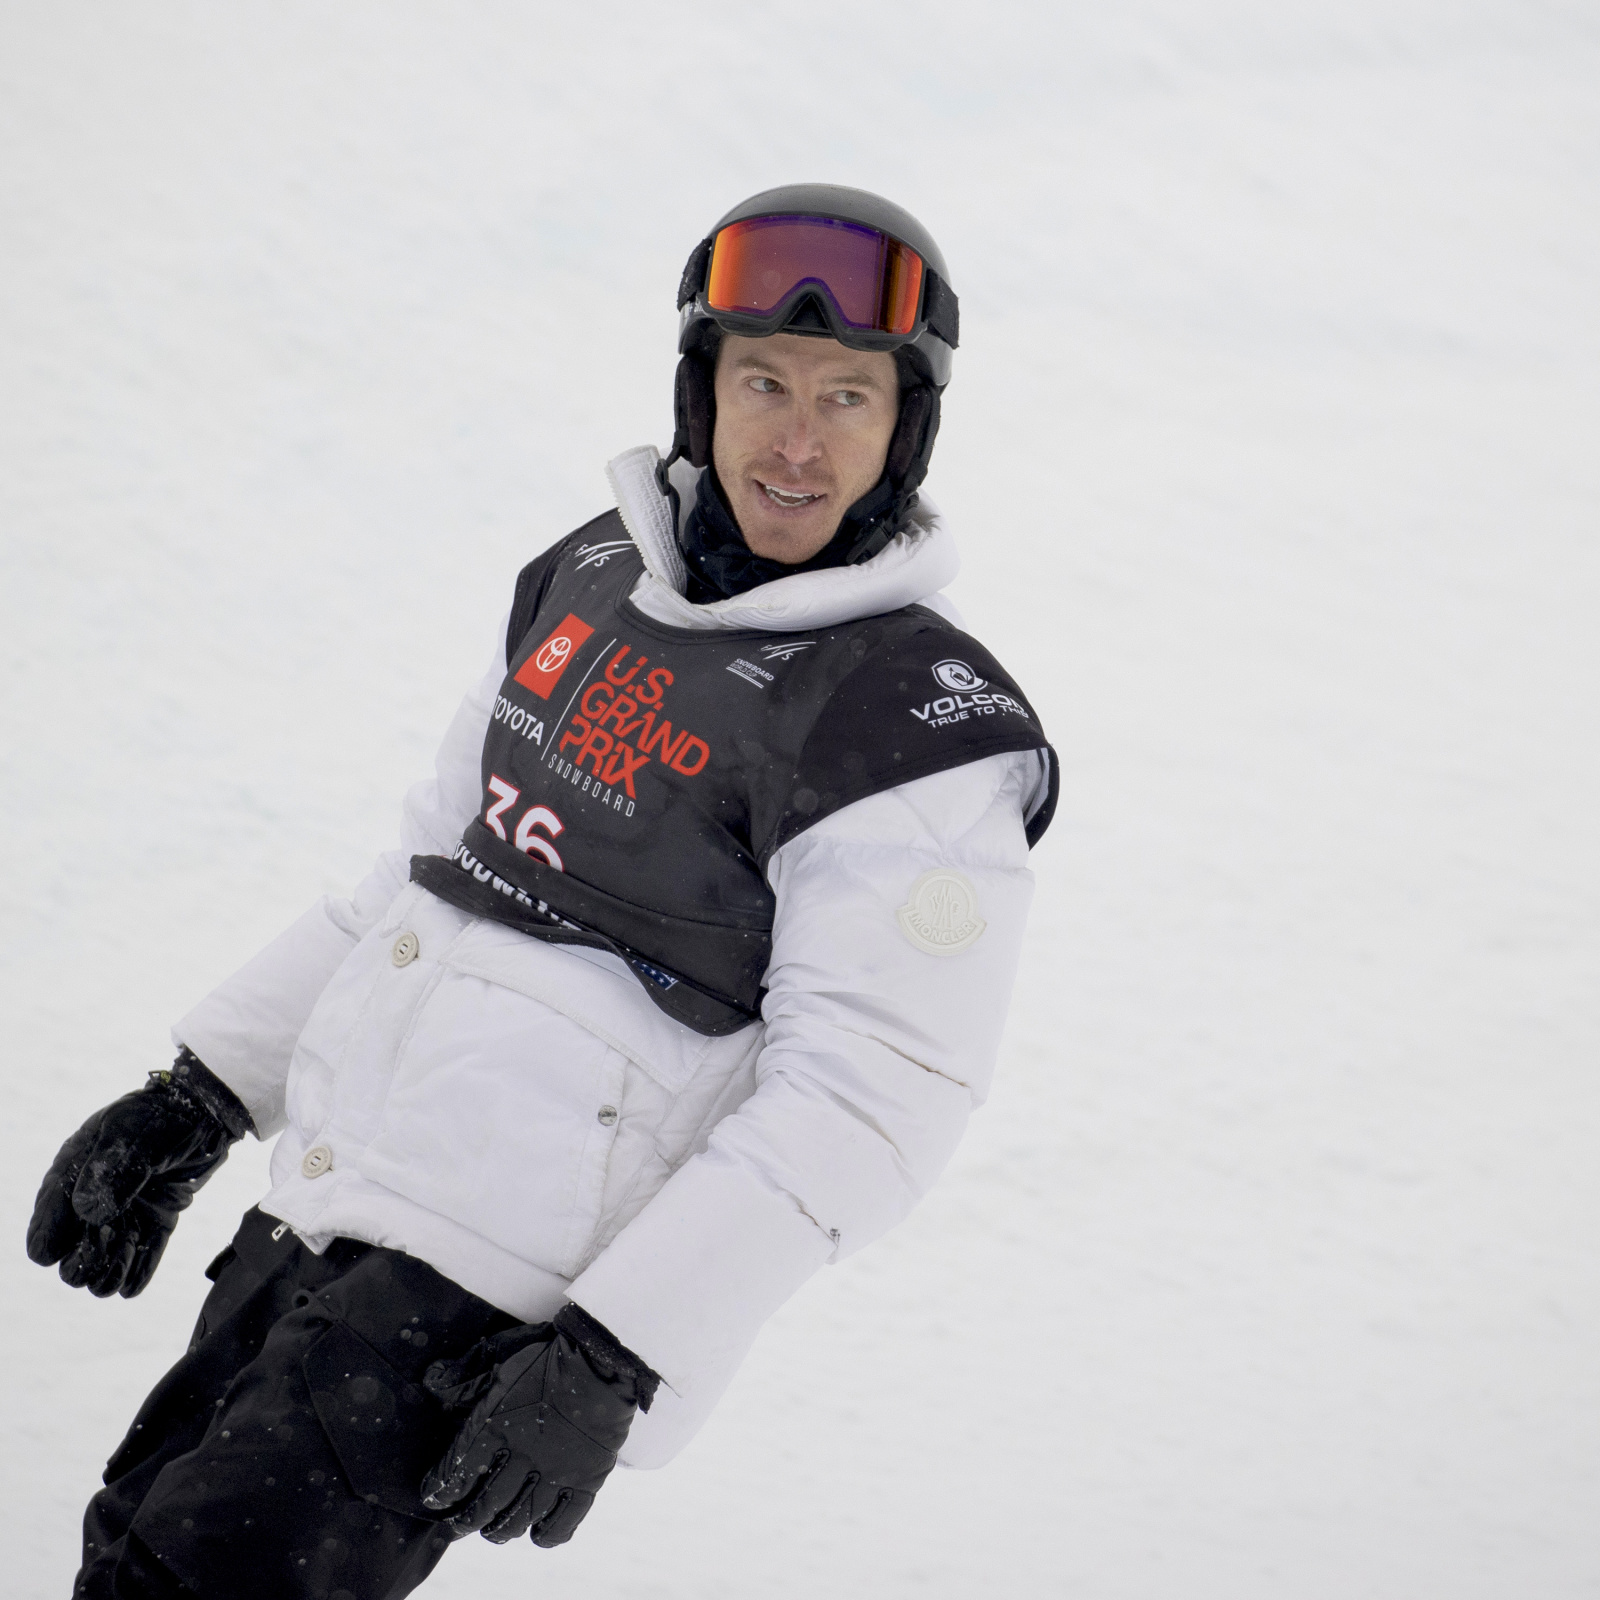 Photos: Snowboarding legend Shaun White